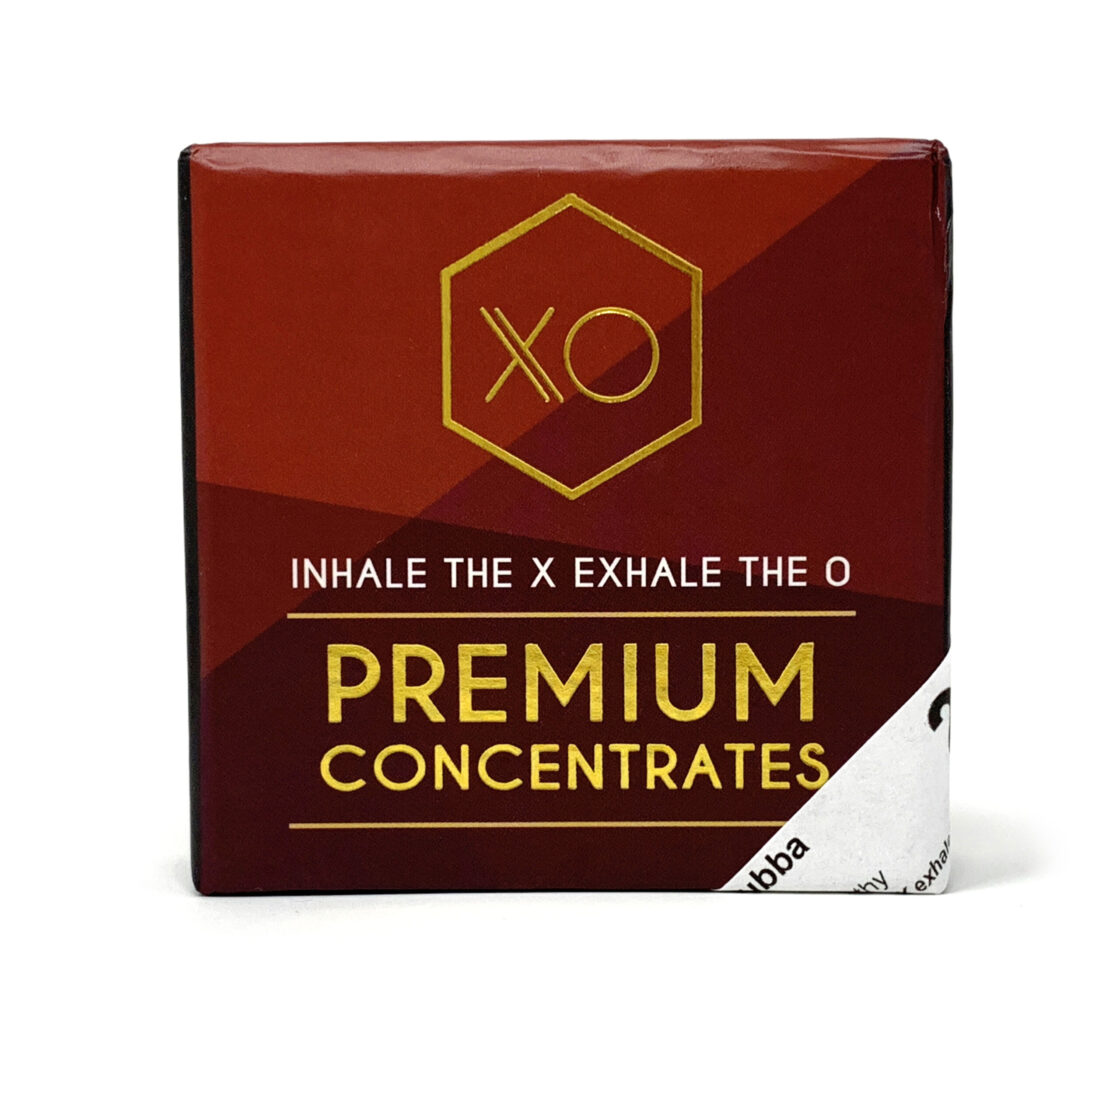 Xo Premium Concentrates – Shatter (2g) – Death Bubba